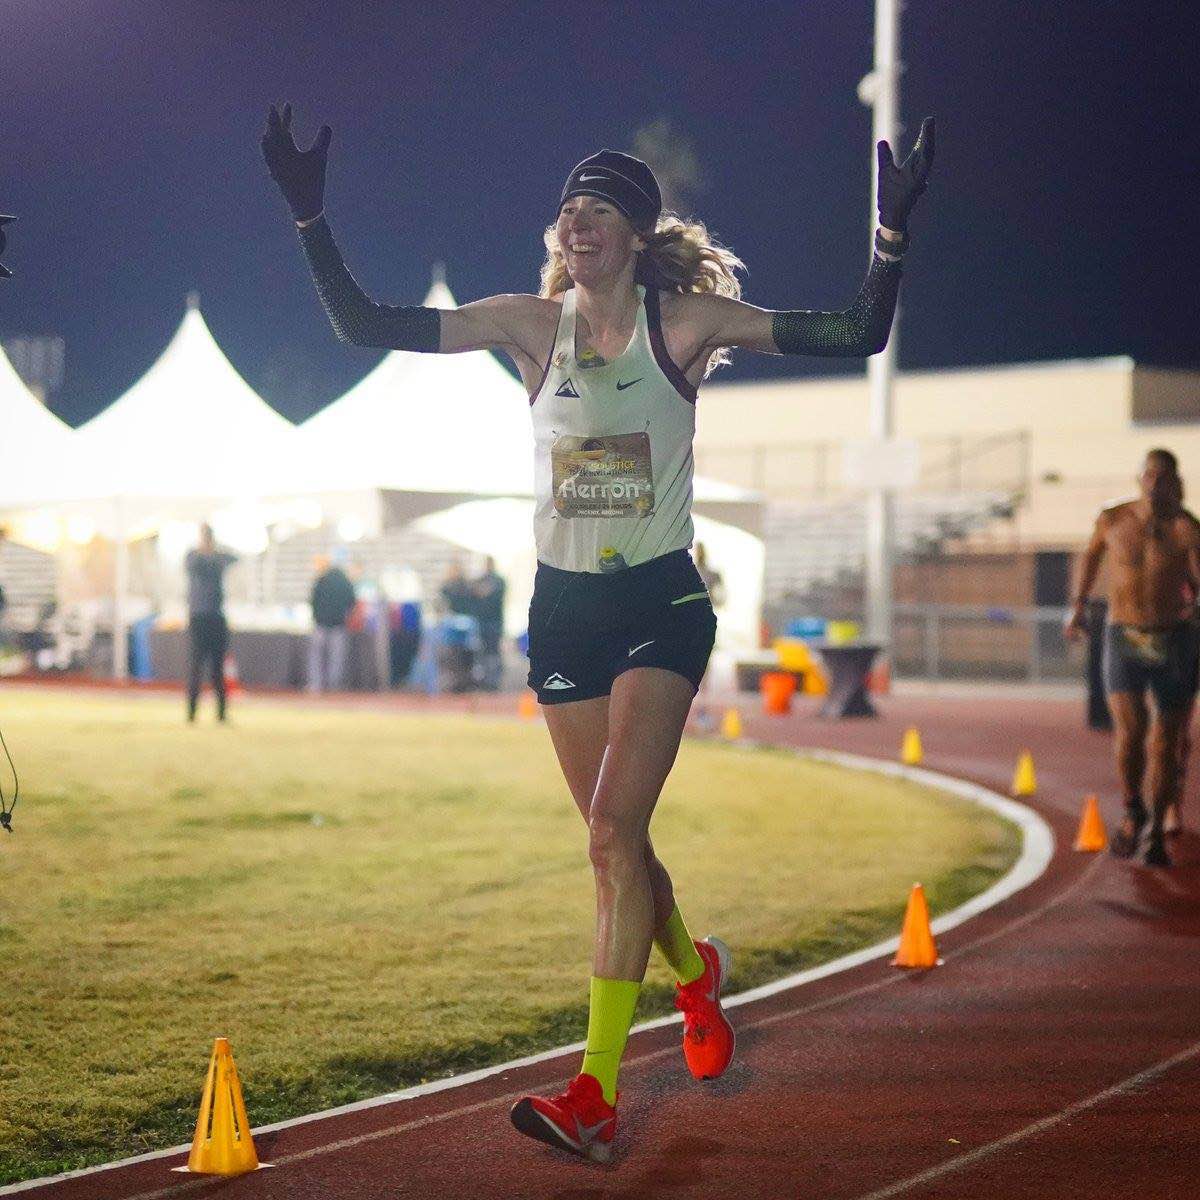 Camille Herron 24 hour world record 2018